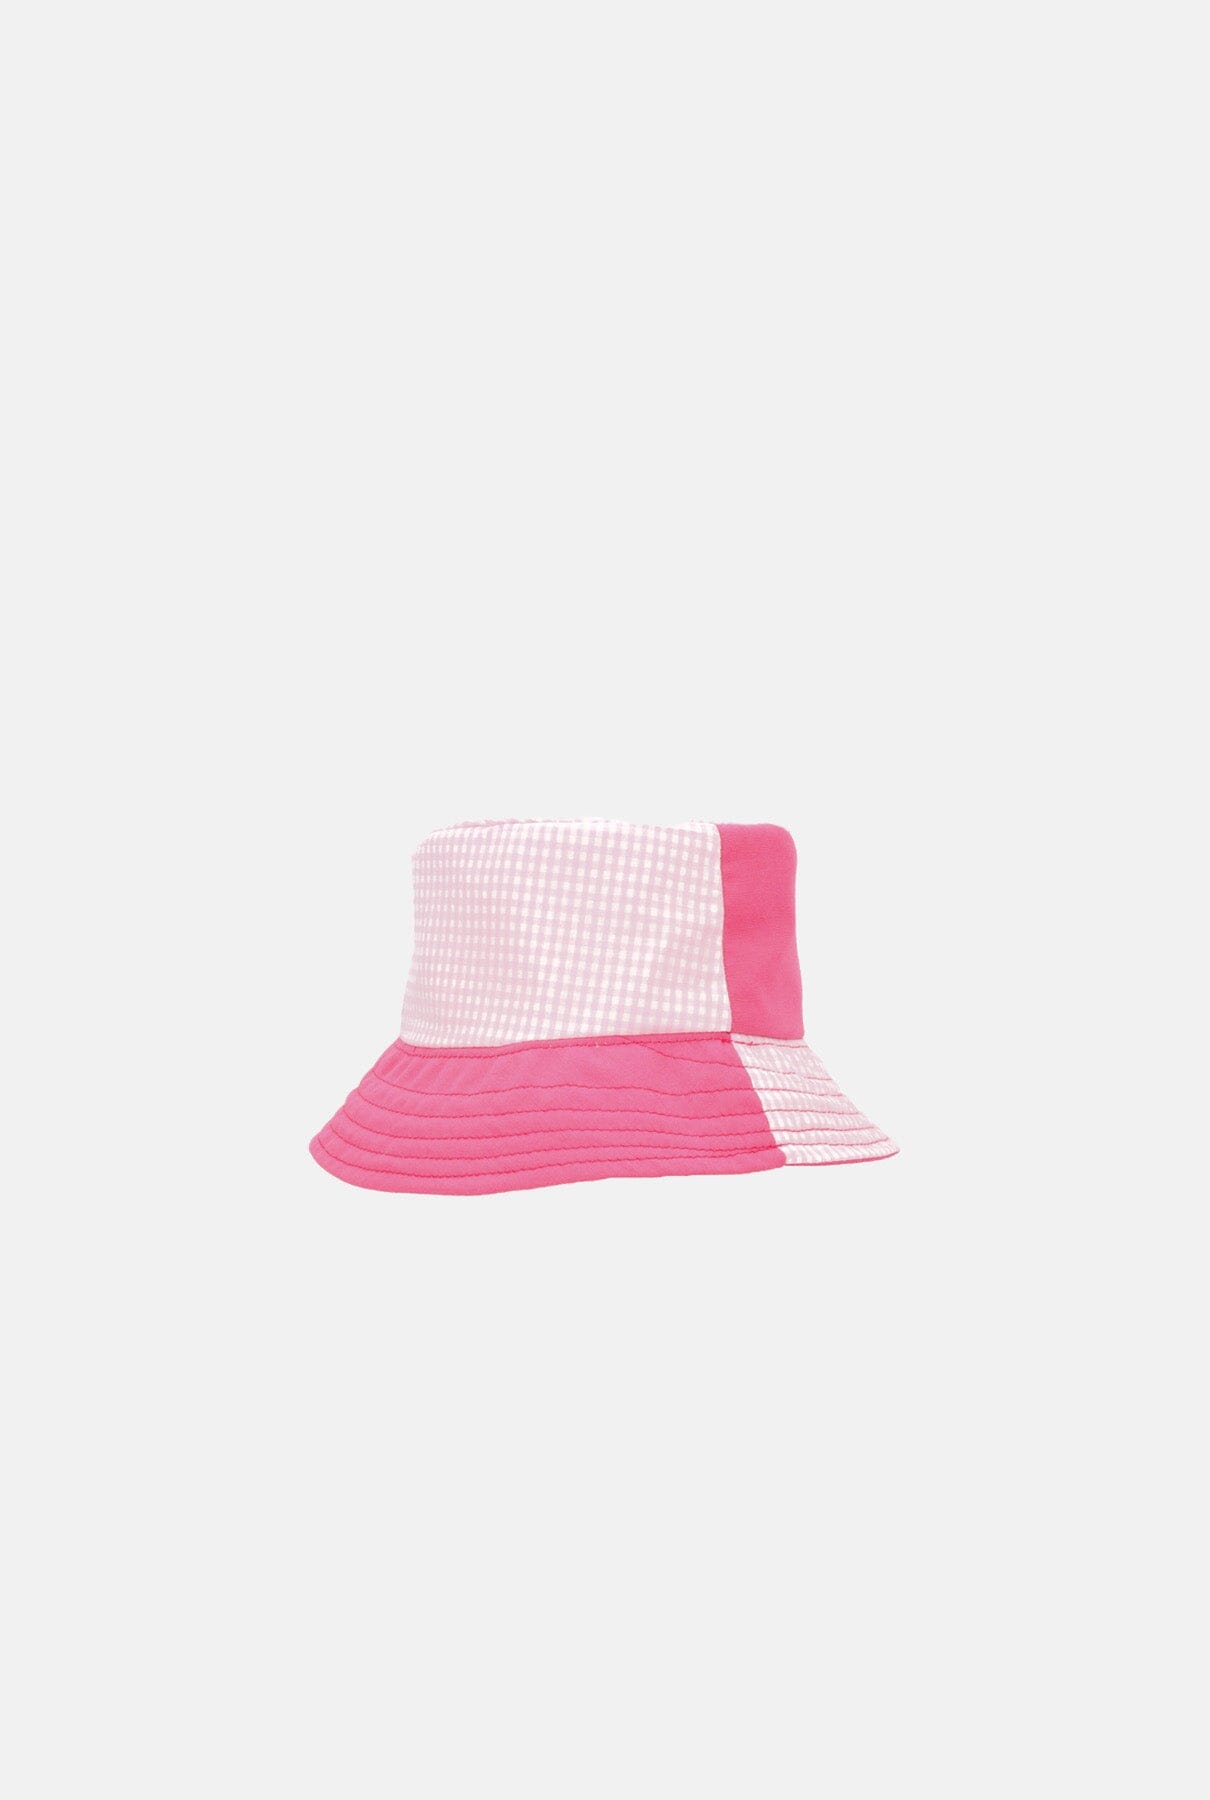 Reversible Block-Vichy pink hat Hats Gakomi 